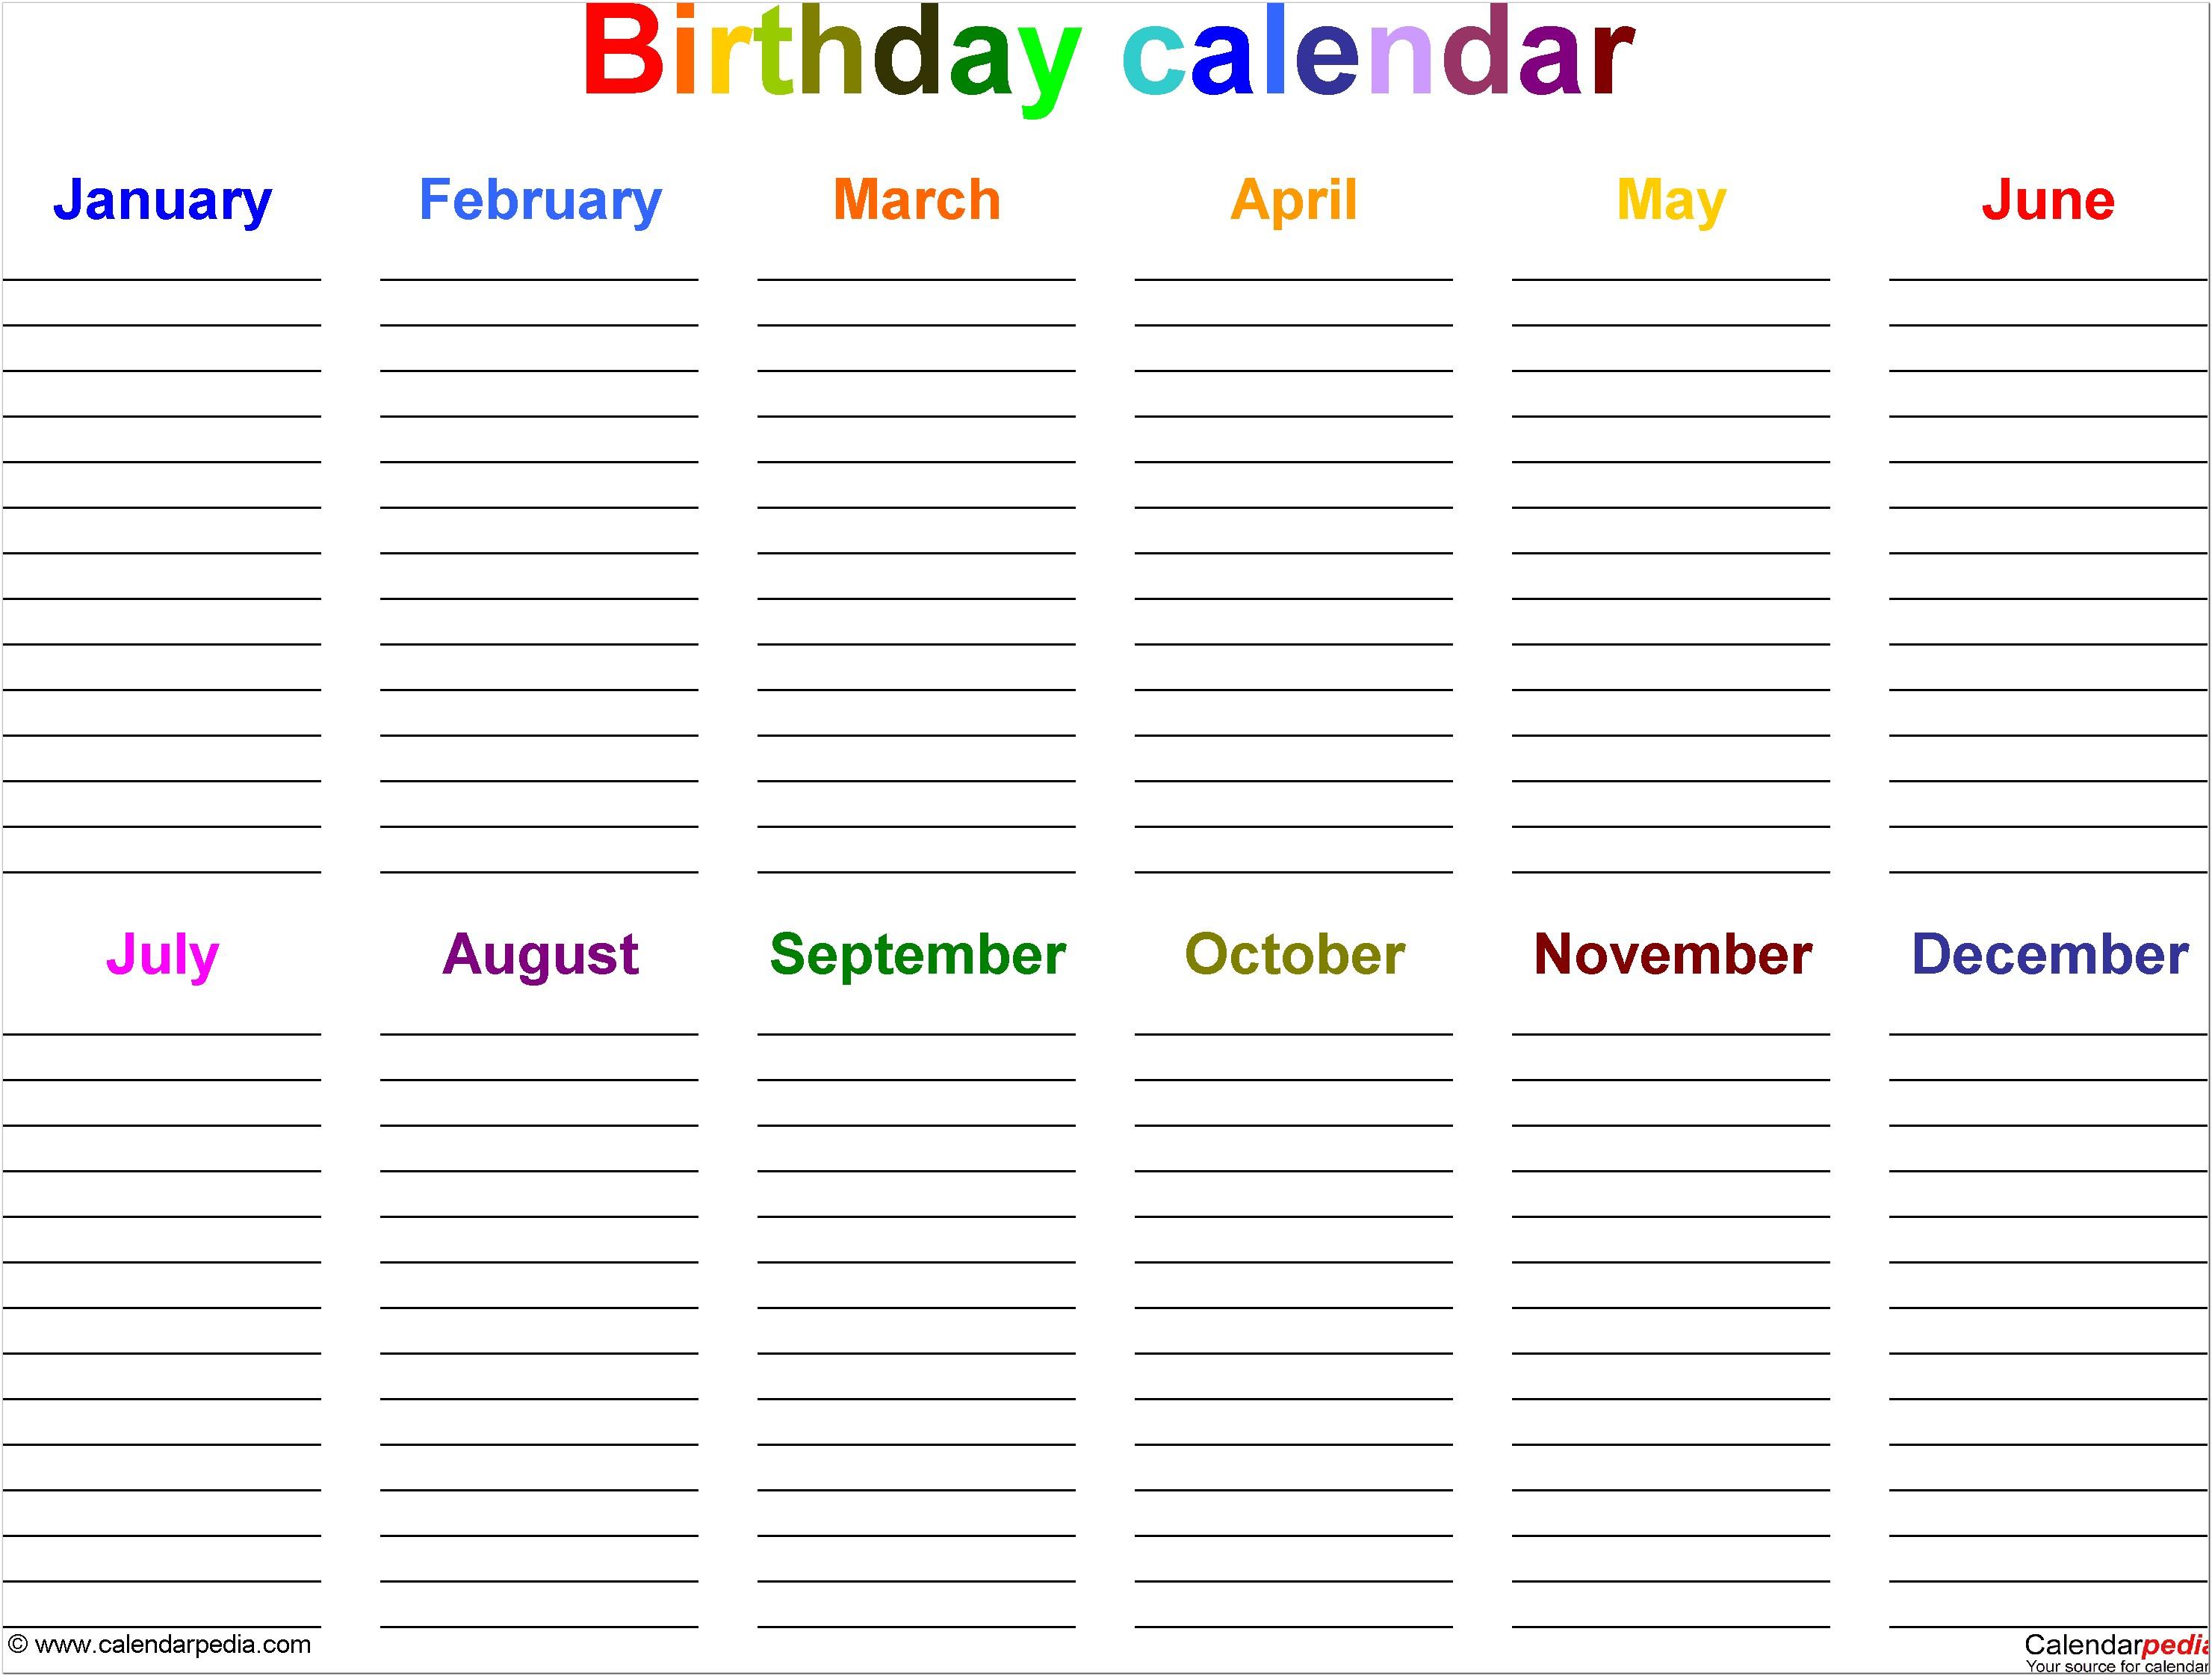 Birthday Calendars Templates Free